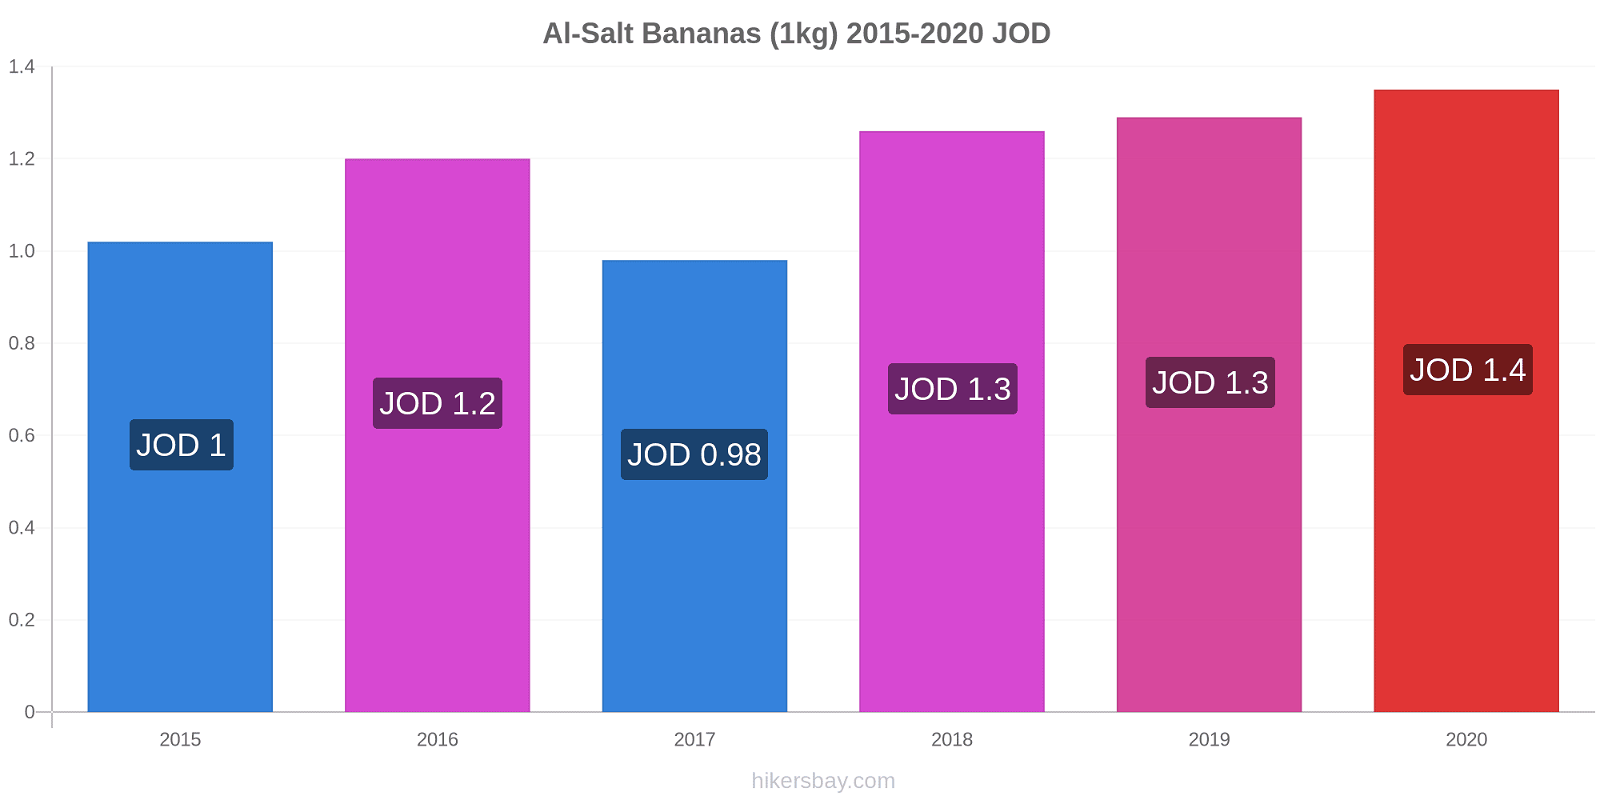 Al-Salt price changes Bananas (1kg) hikersbay.com